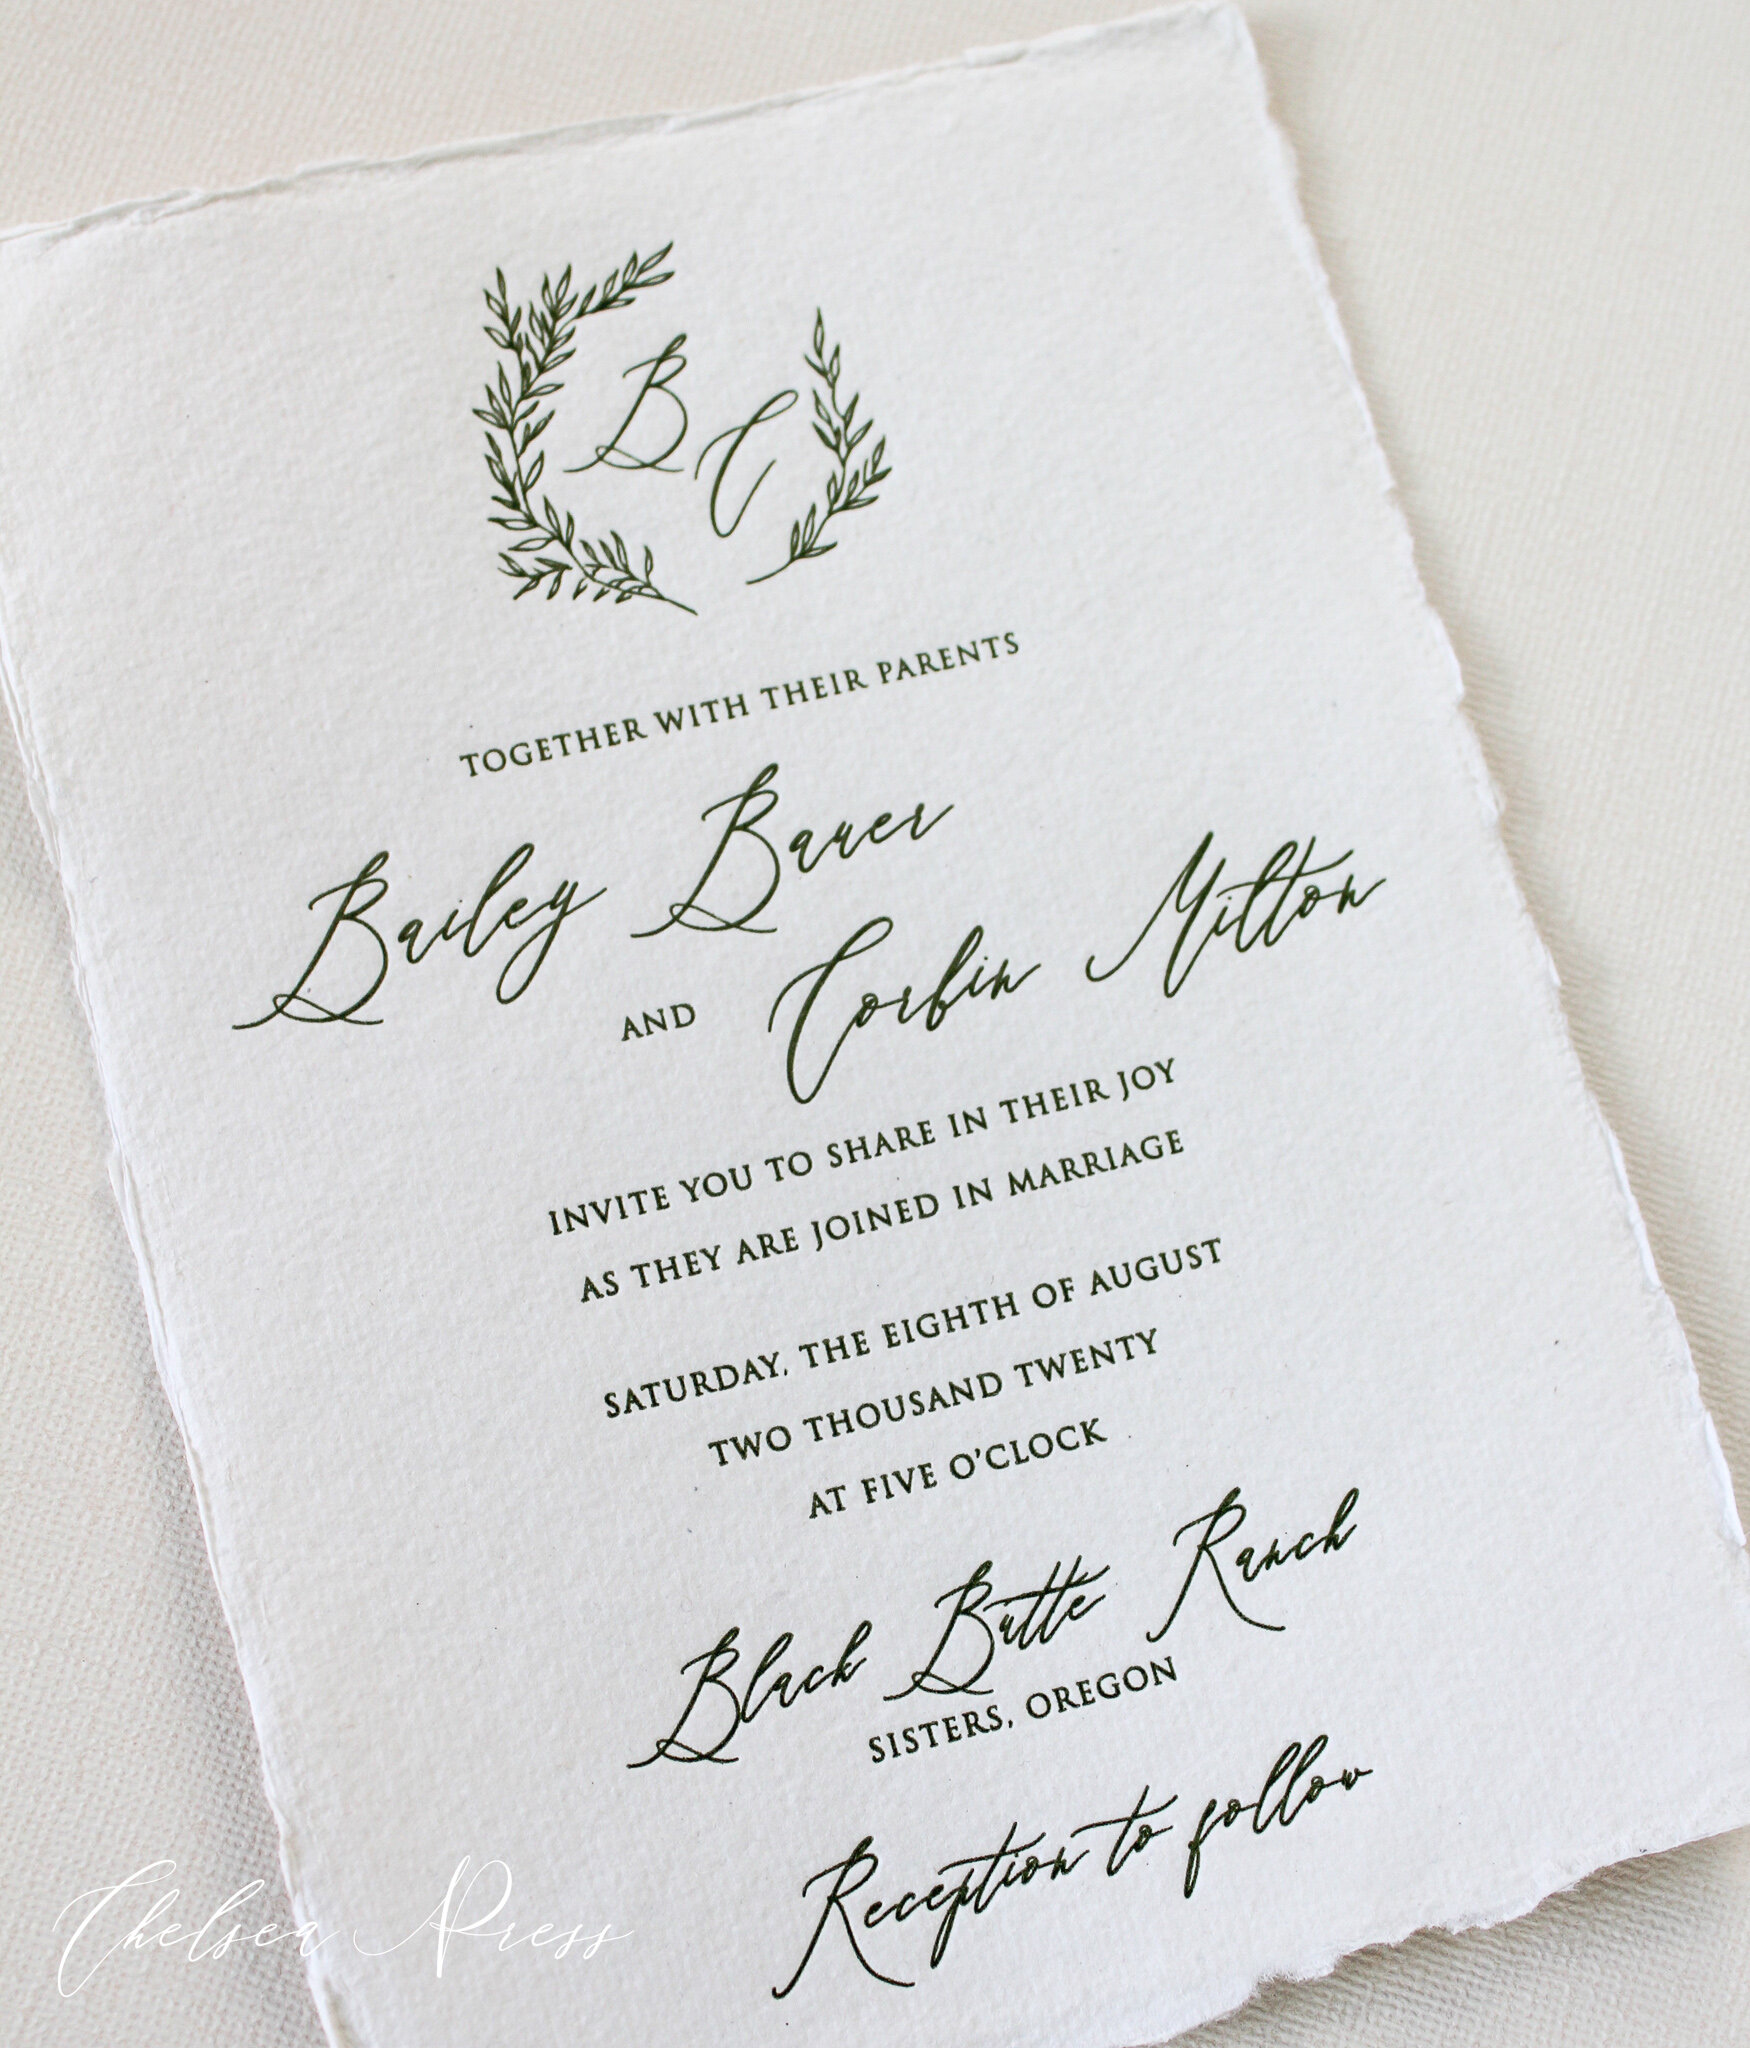 Chelsea Press Invitations-Bailey and Corbin wedding invitation.jpg